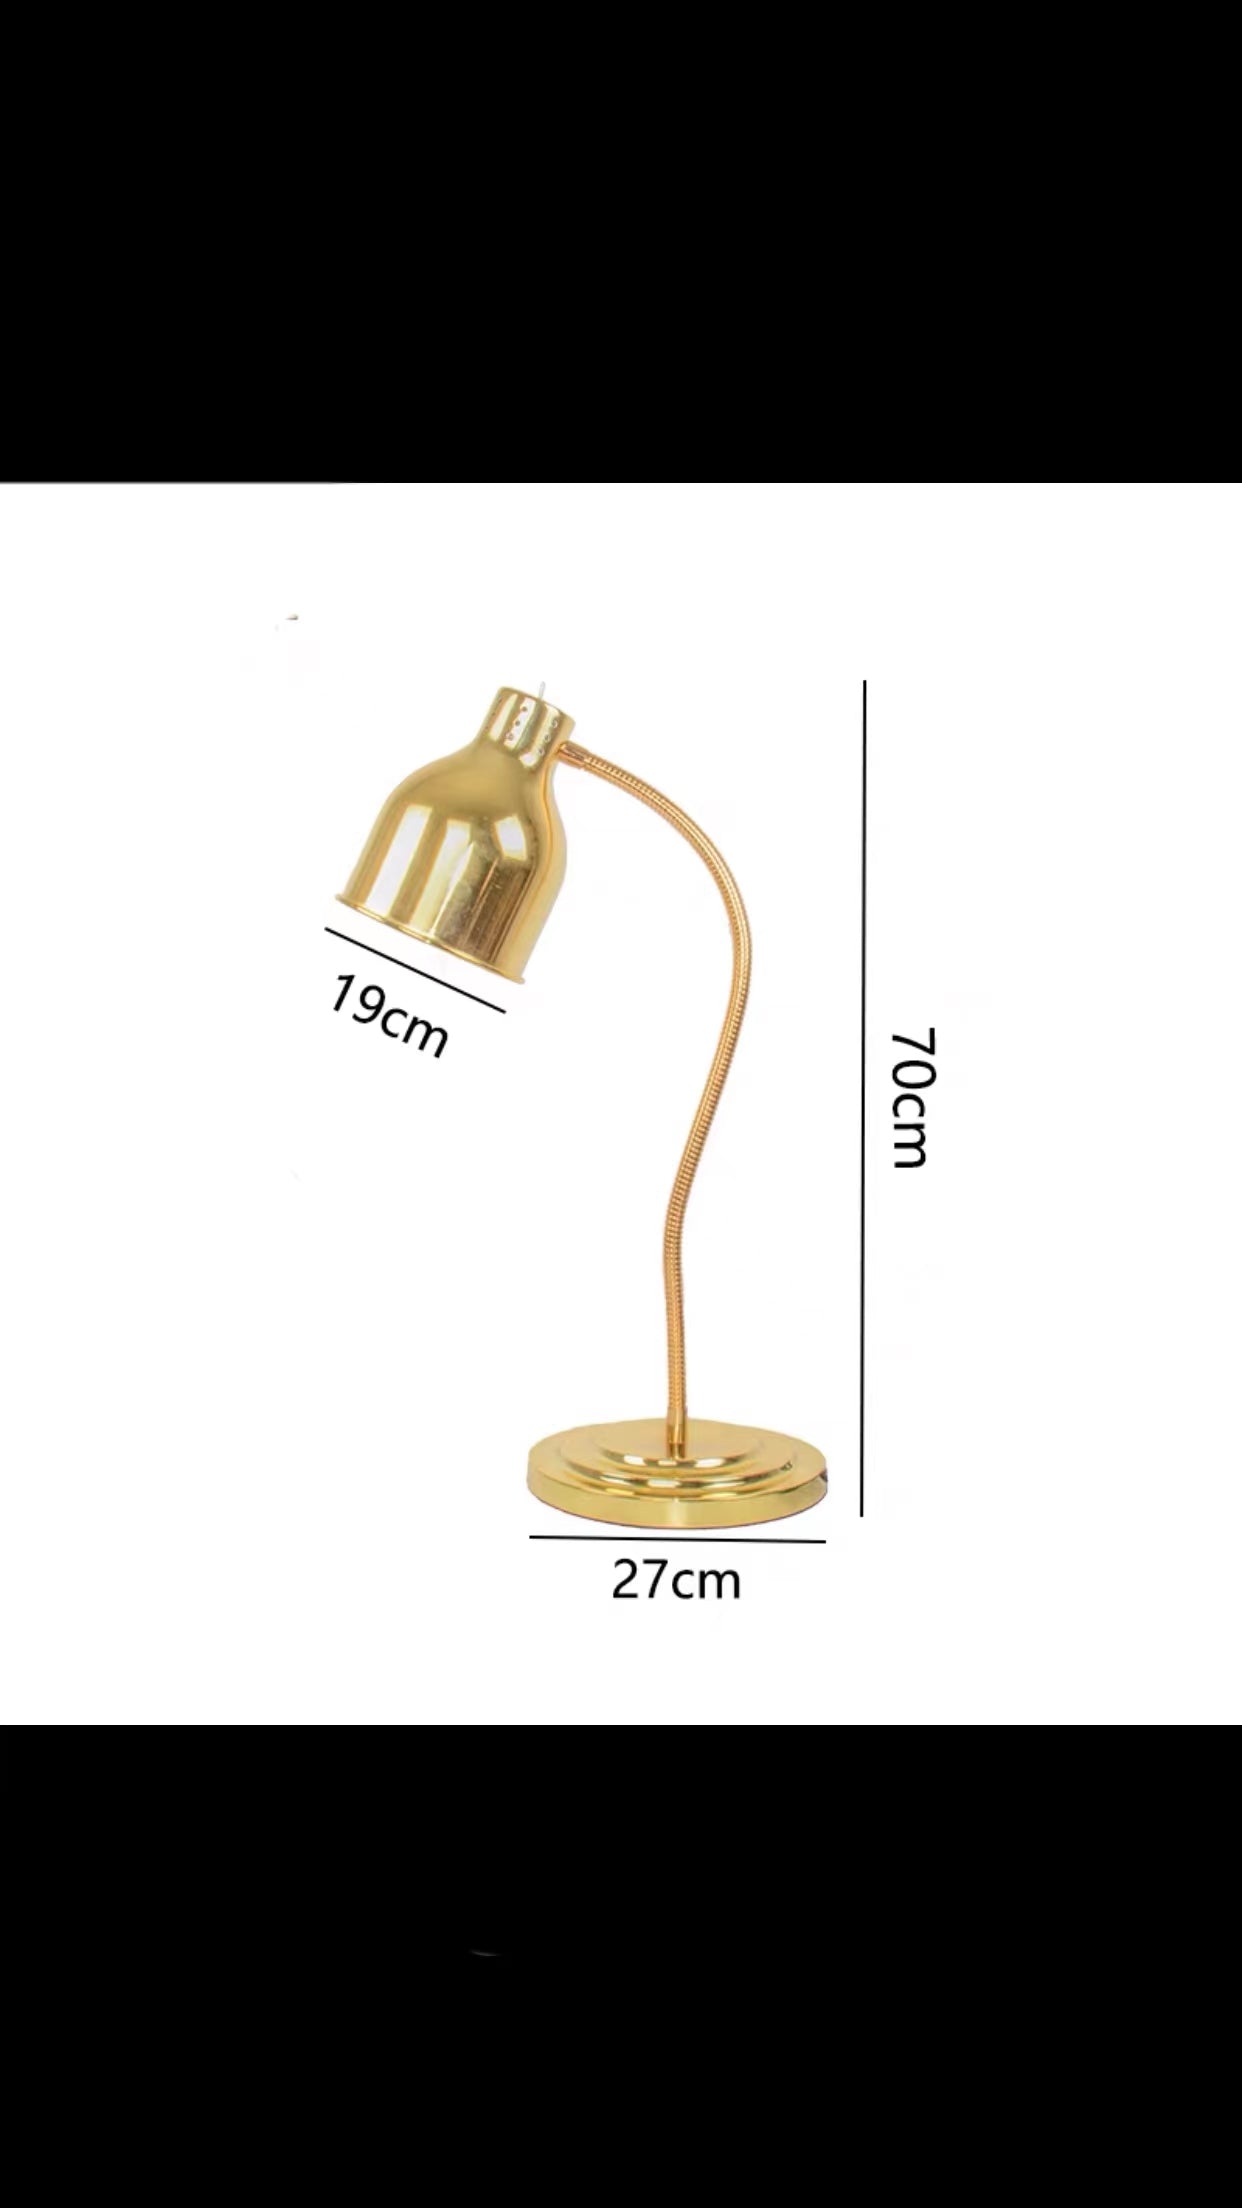 Towcester Metal Desk Lamp - 4 Seasons Home Gadgets